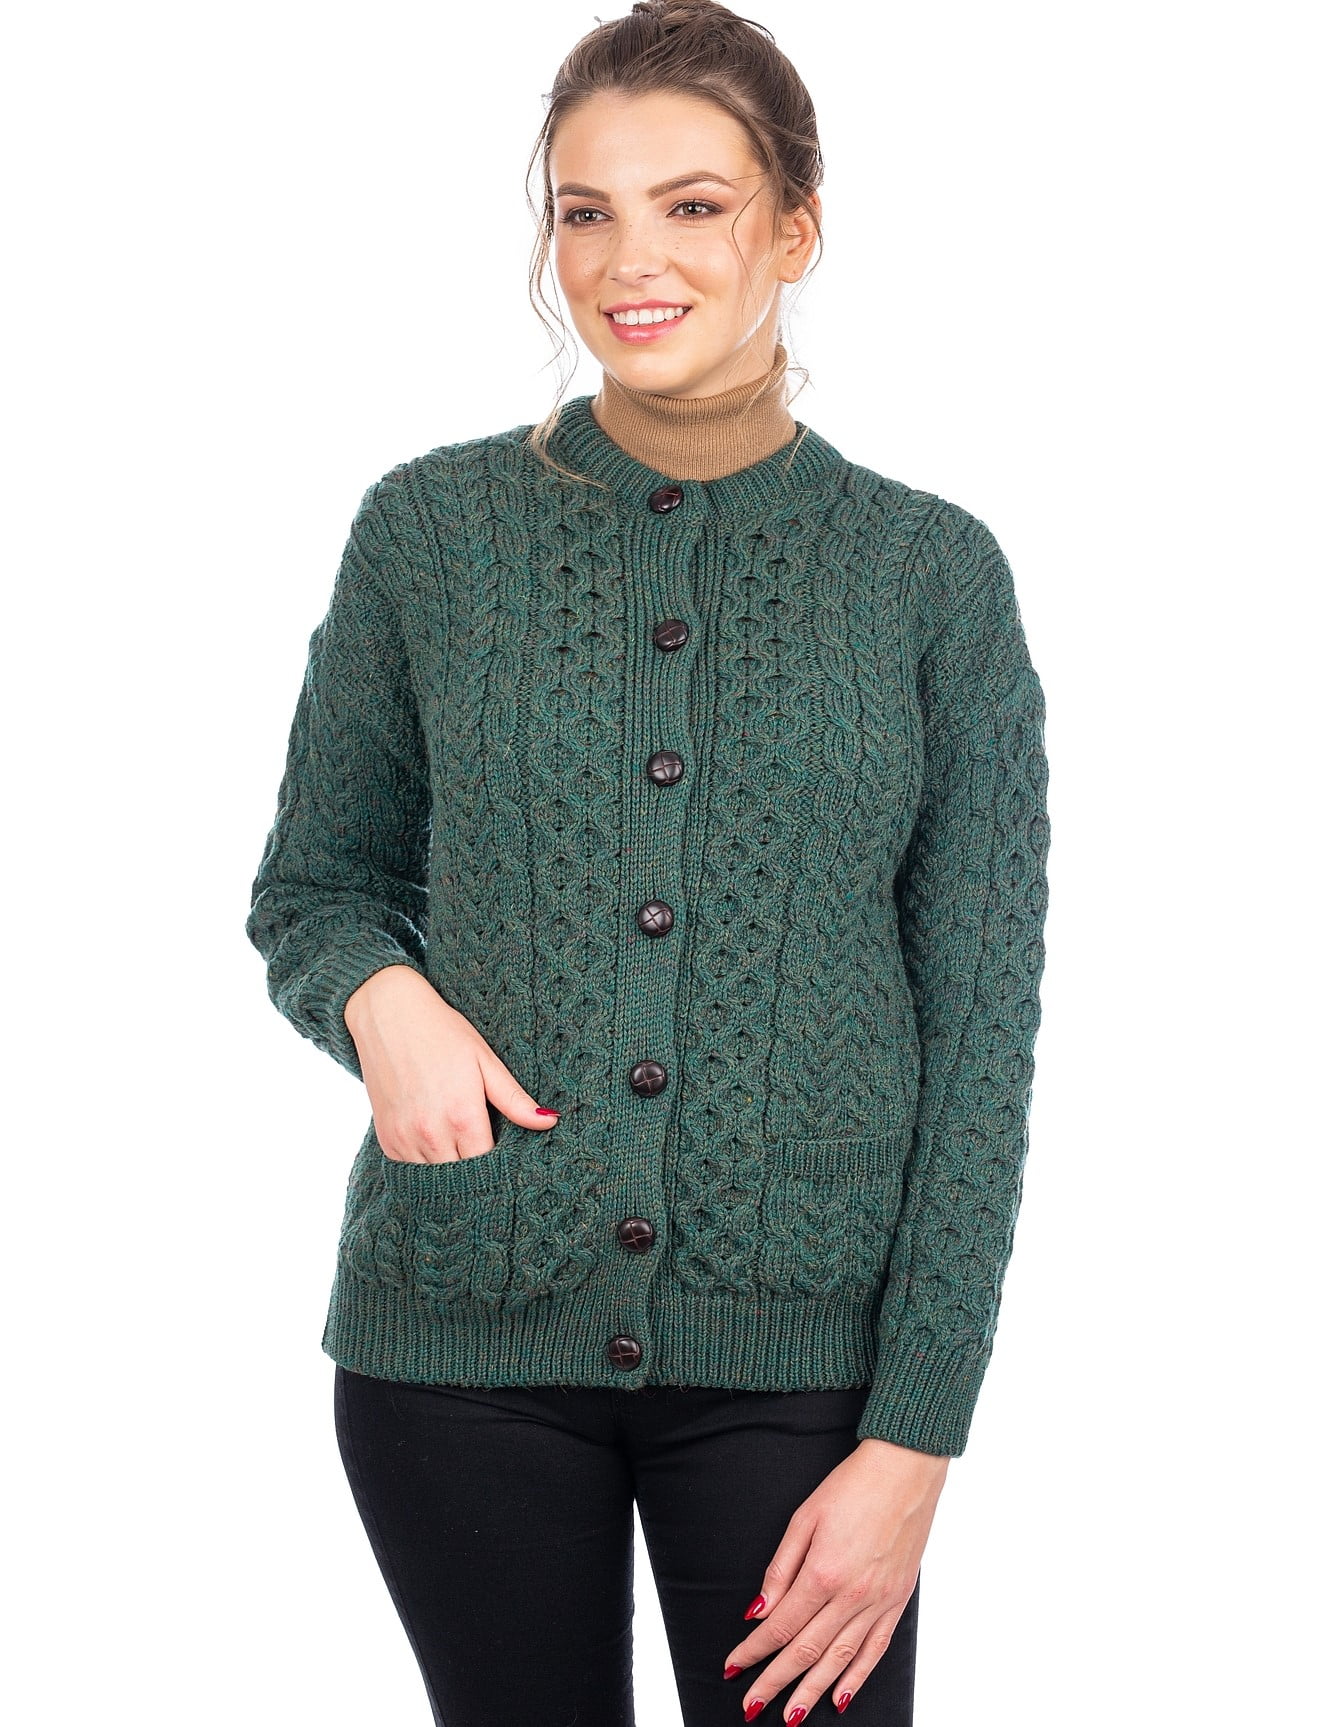 SAOL Irish Aran 100% Premium Soft Merino Wool Button Up Cardigan ...